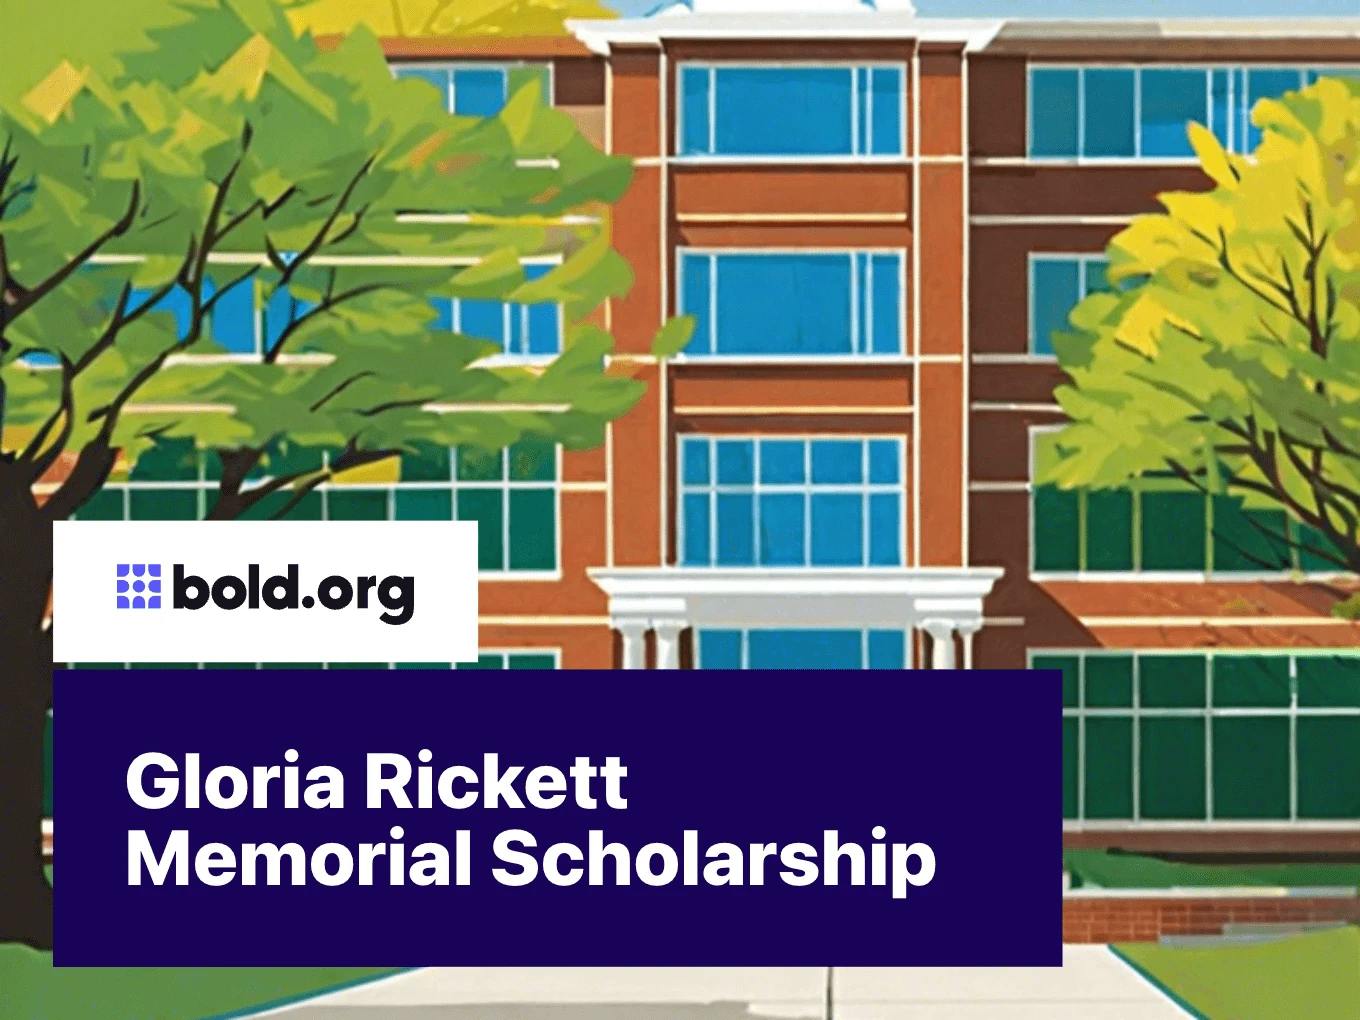 Gloria Rickett Memorial Scholarship